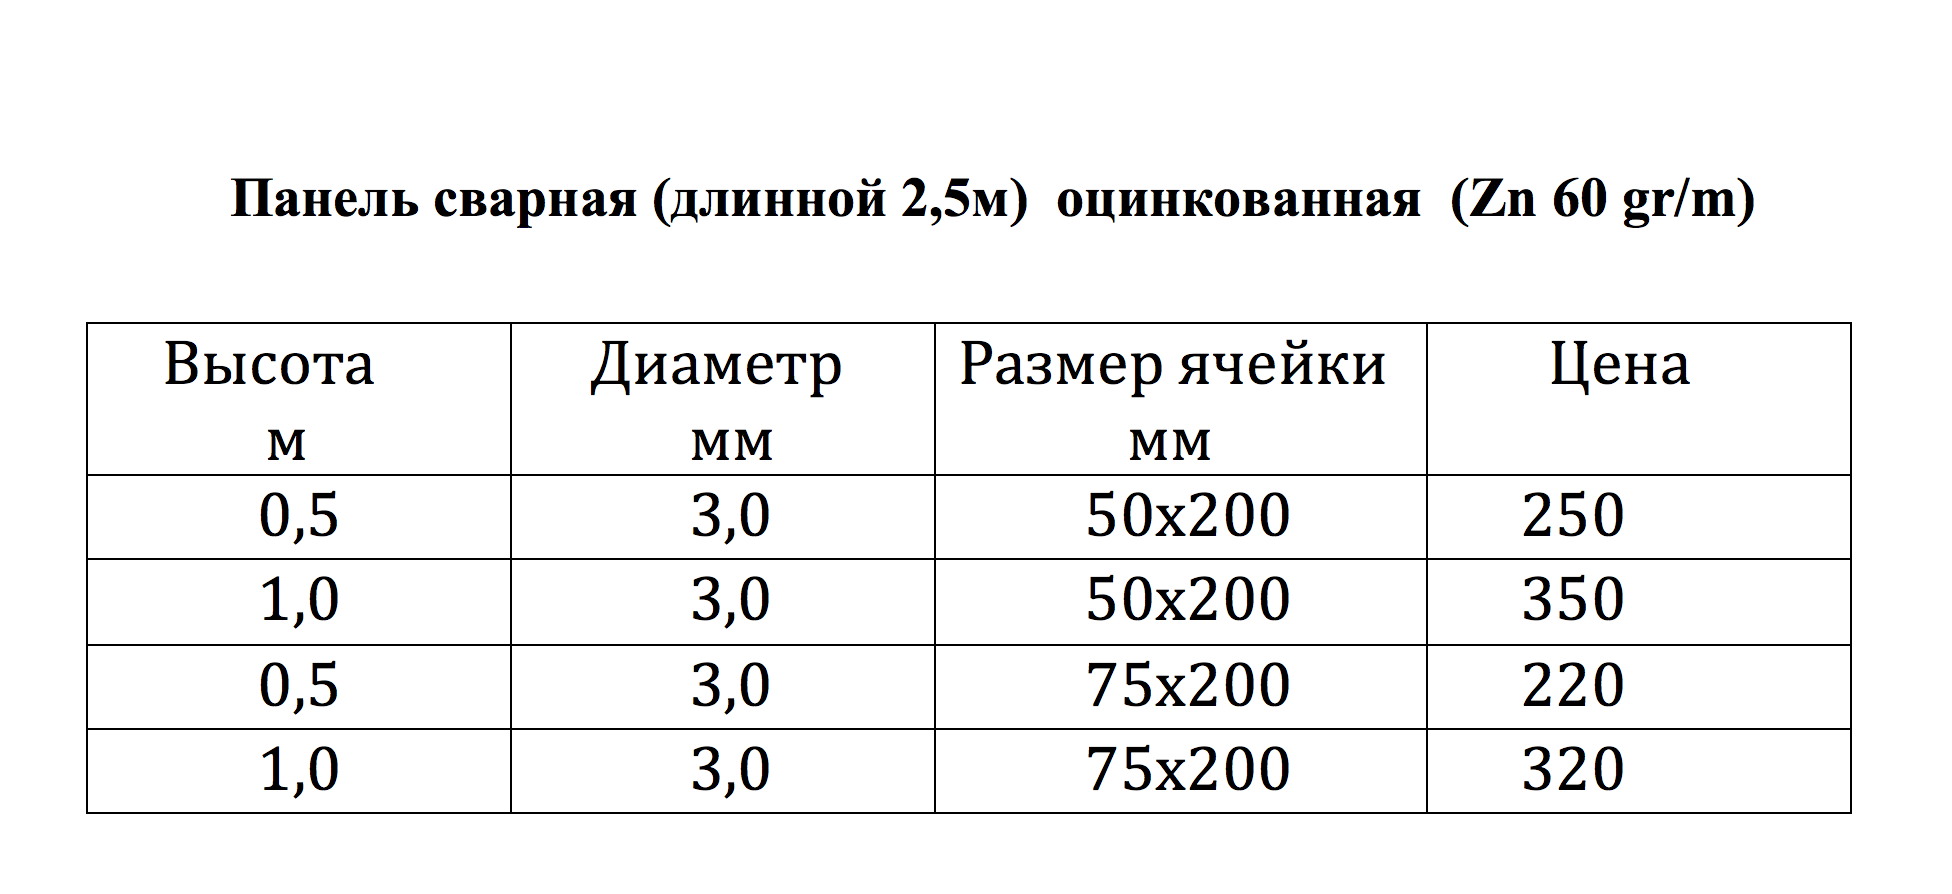 Заборы панельные 3D оцинкованные Калининград. Таблица расчета цены.